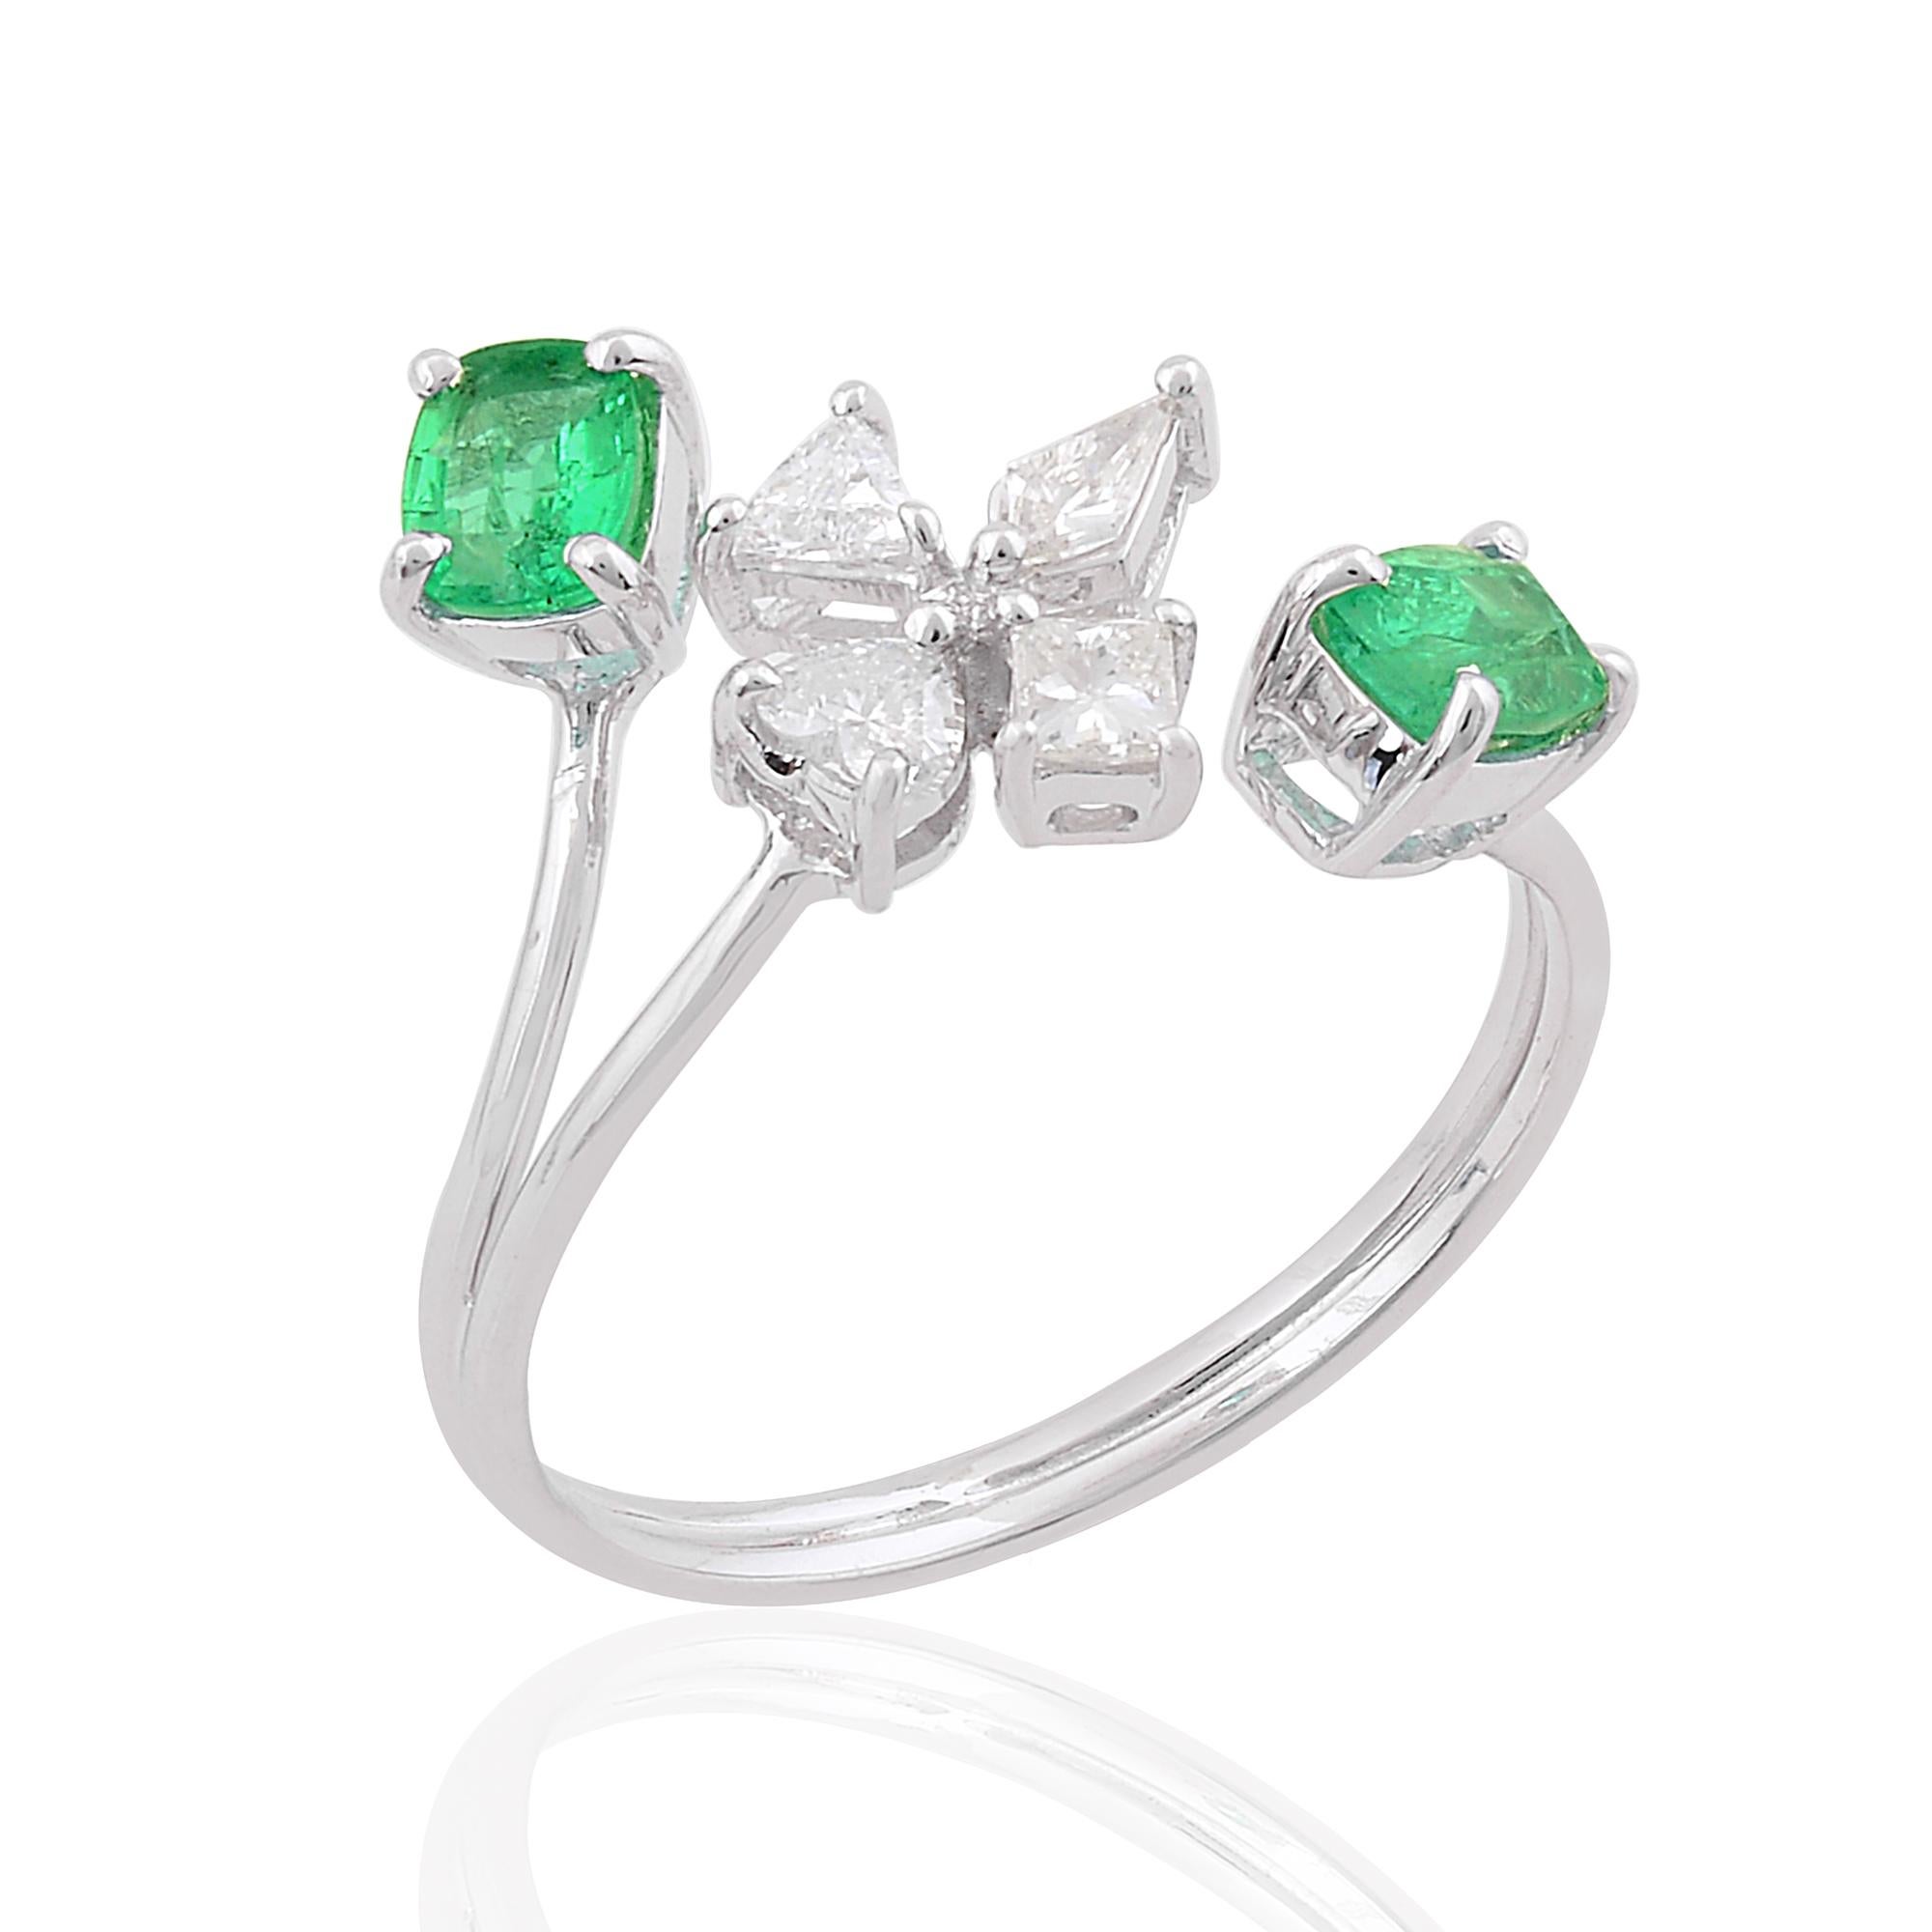 For Sale:  Natural Emerald Gemstone Diamond Designer Ring 18k White Gold Fine Jewelry 4